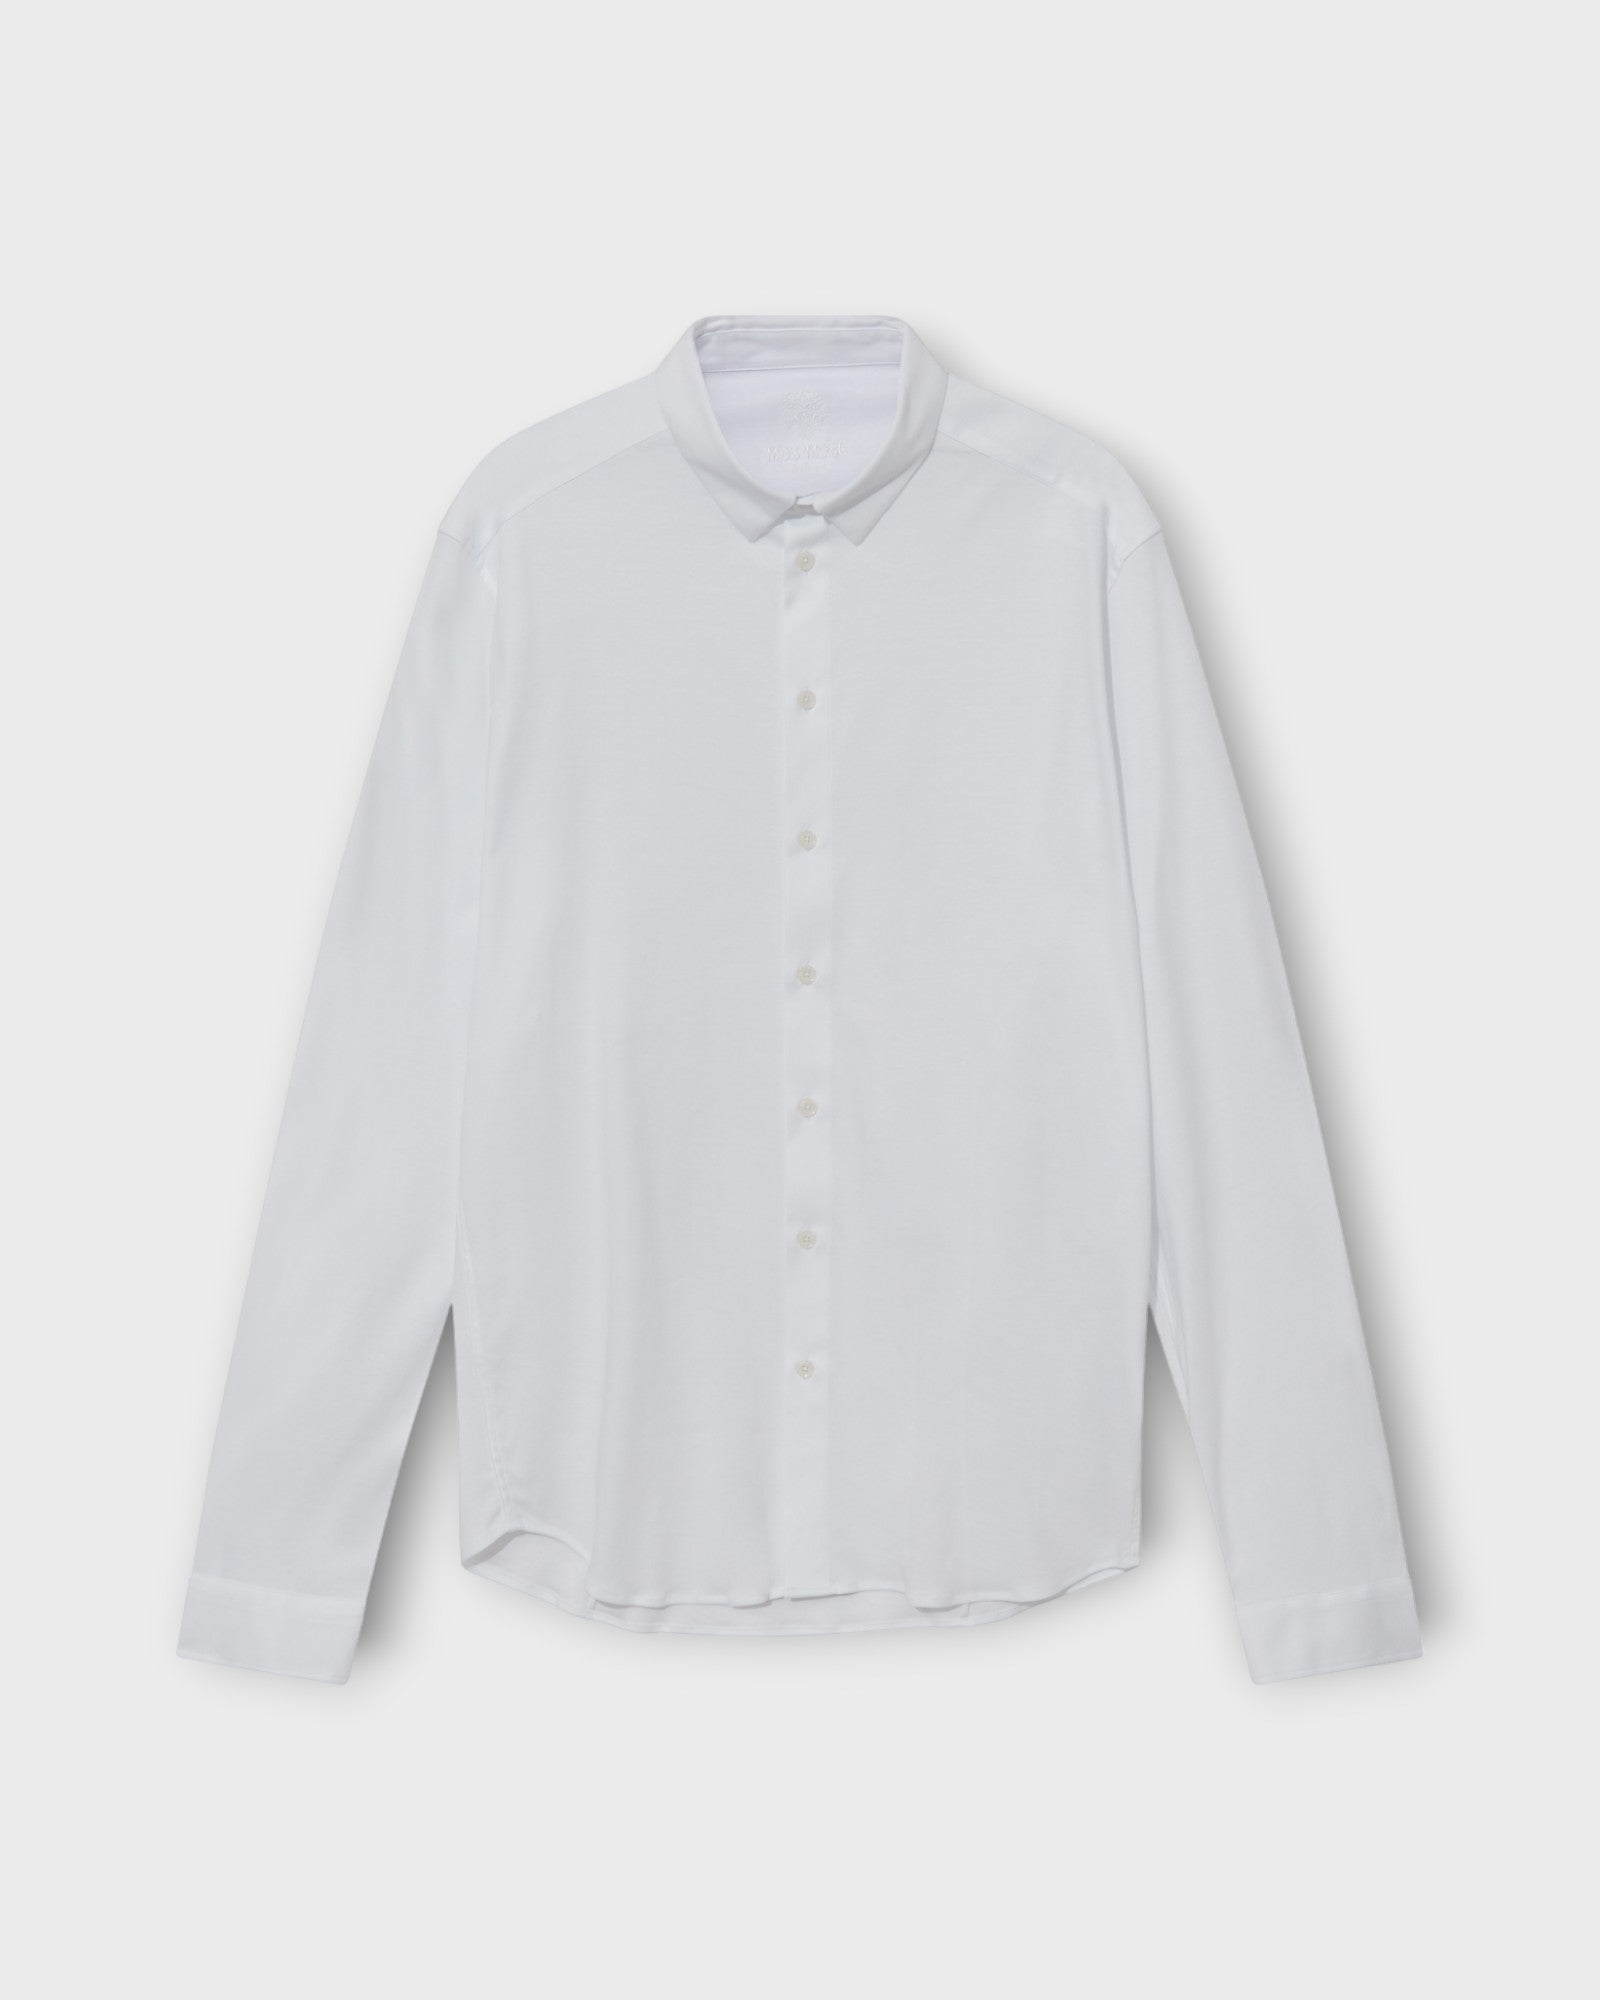 Marco Crunch Jersey Shirt White fra Mos Mosh Gallery. Langærmet hvid herre skjorte. Her set forfra.